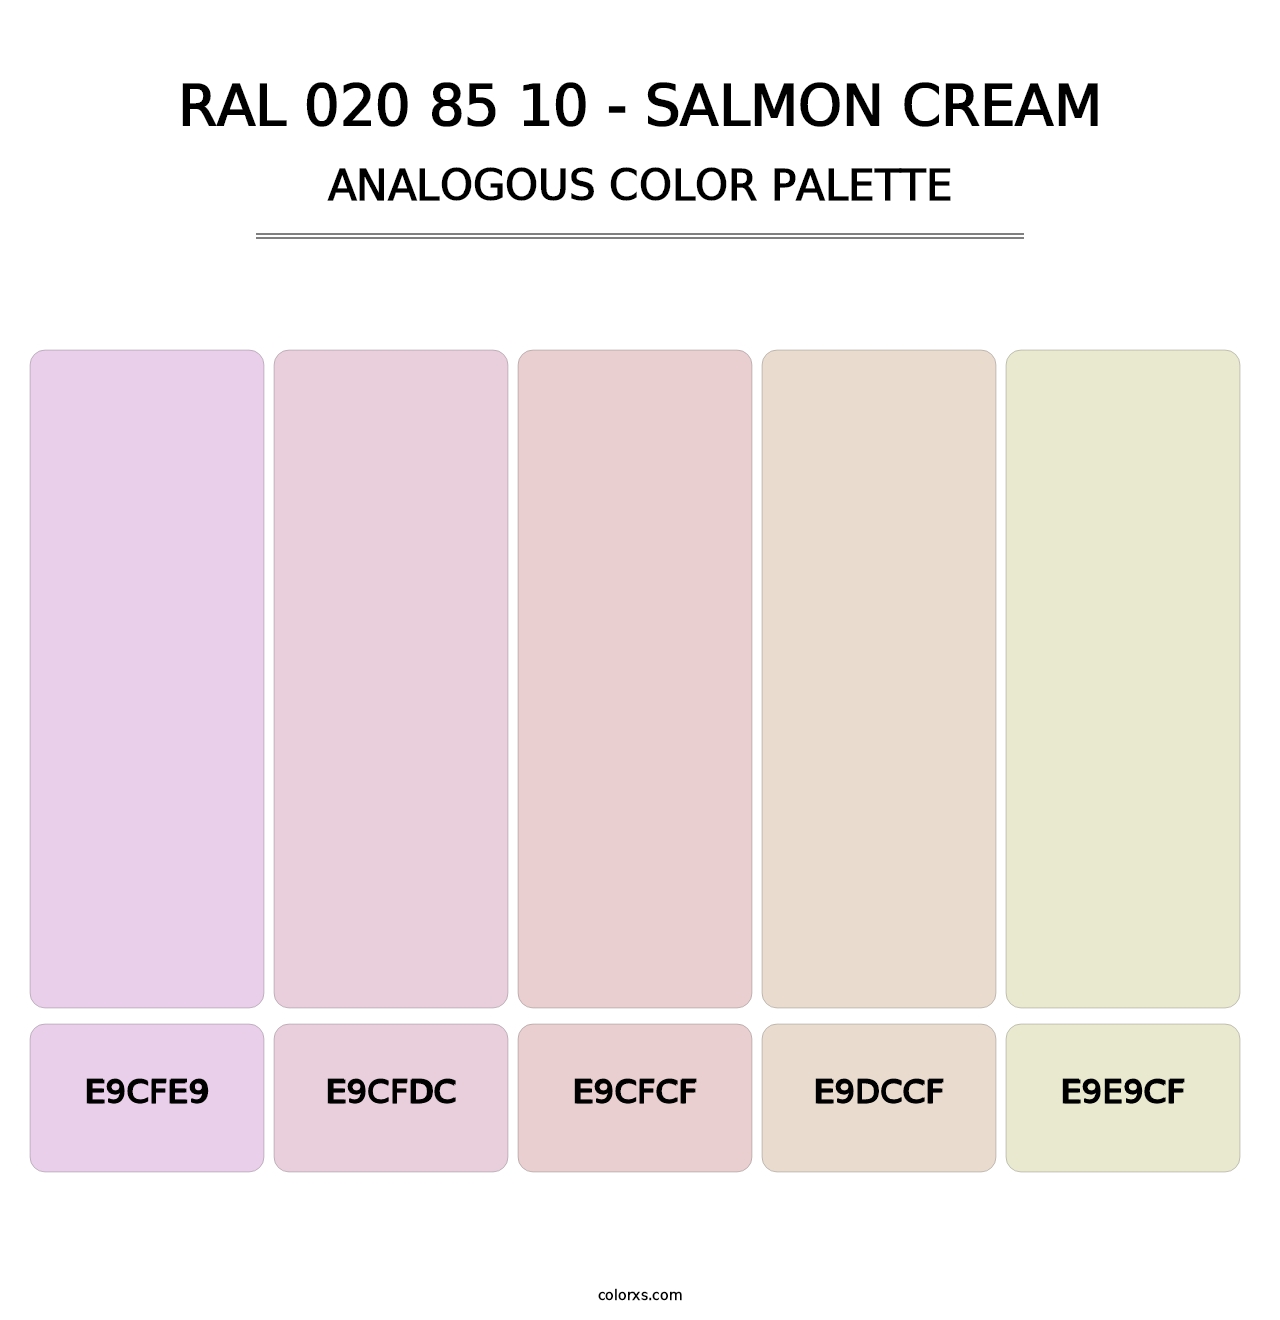 RAL 020 85 10 - Salmon Cream - Analogous Color Palette